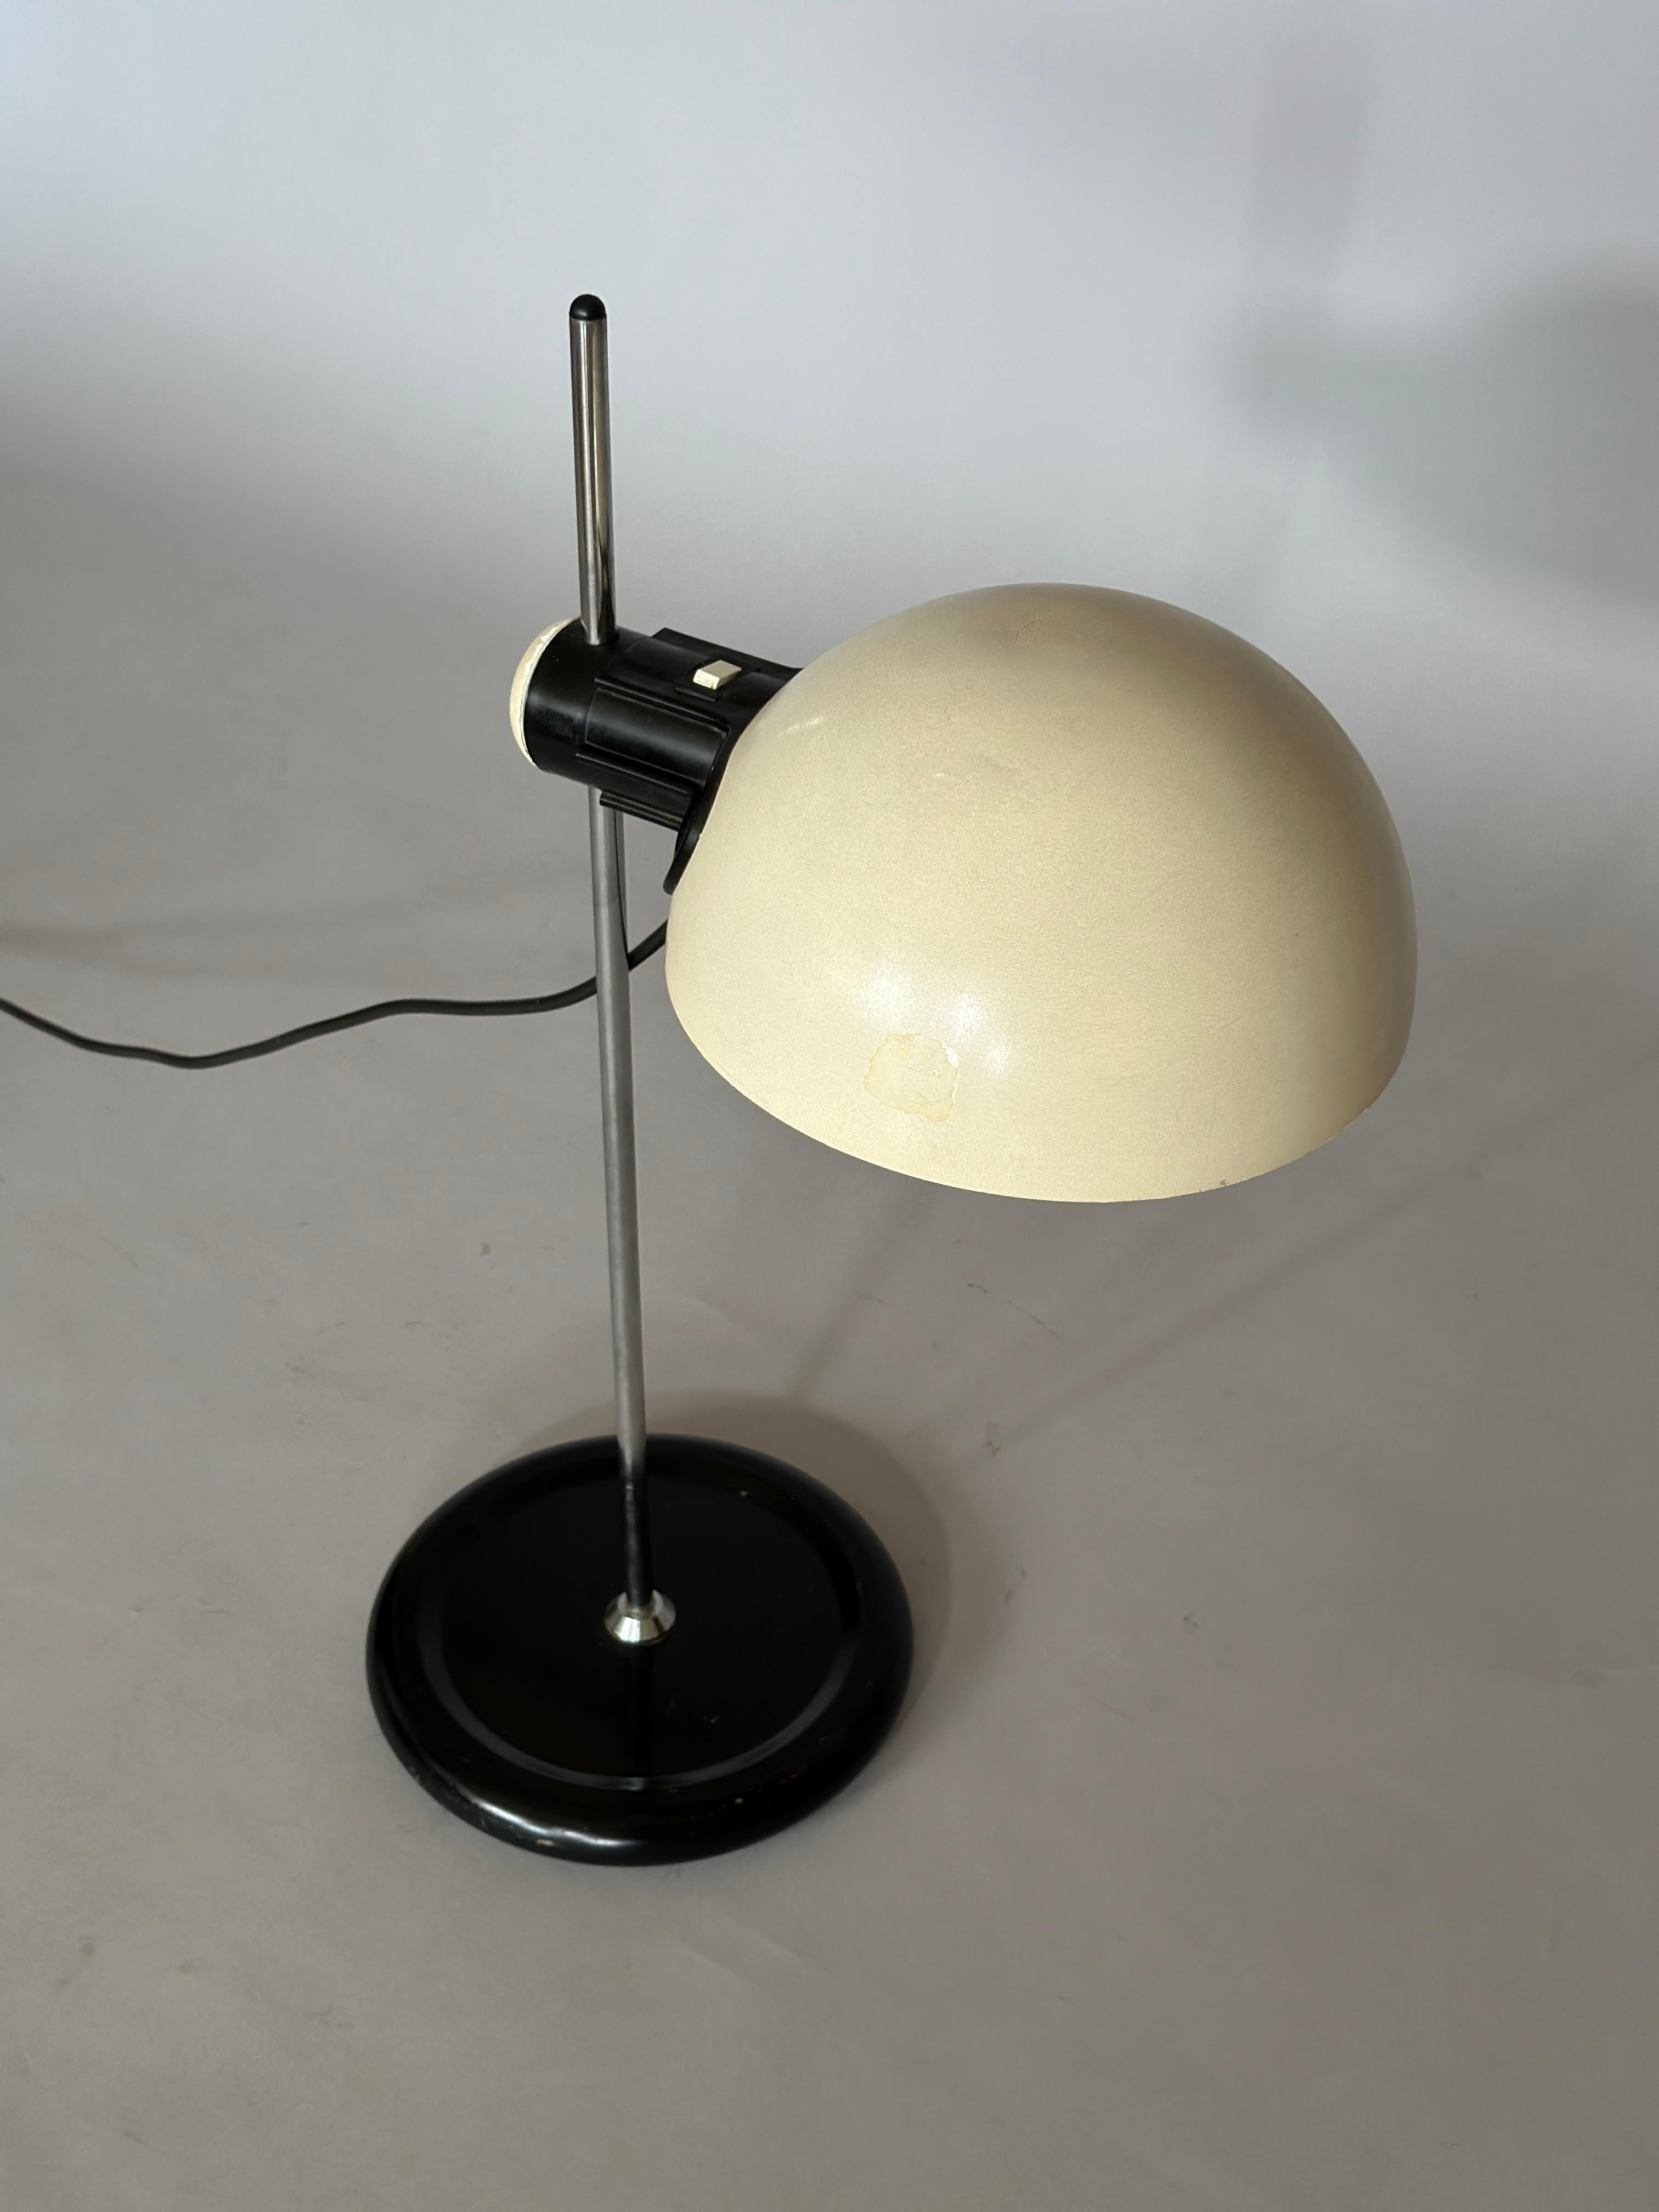 Late 20th Century Guzzini Table Lamp By Emilio Fabio Simon Italy 1970s For Sale